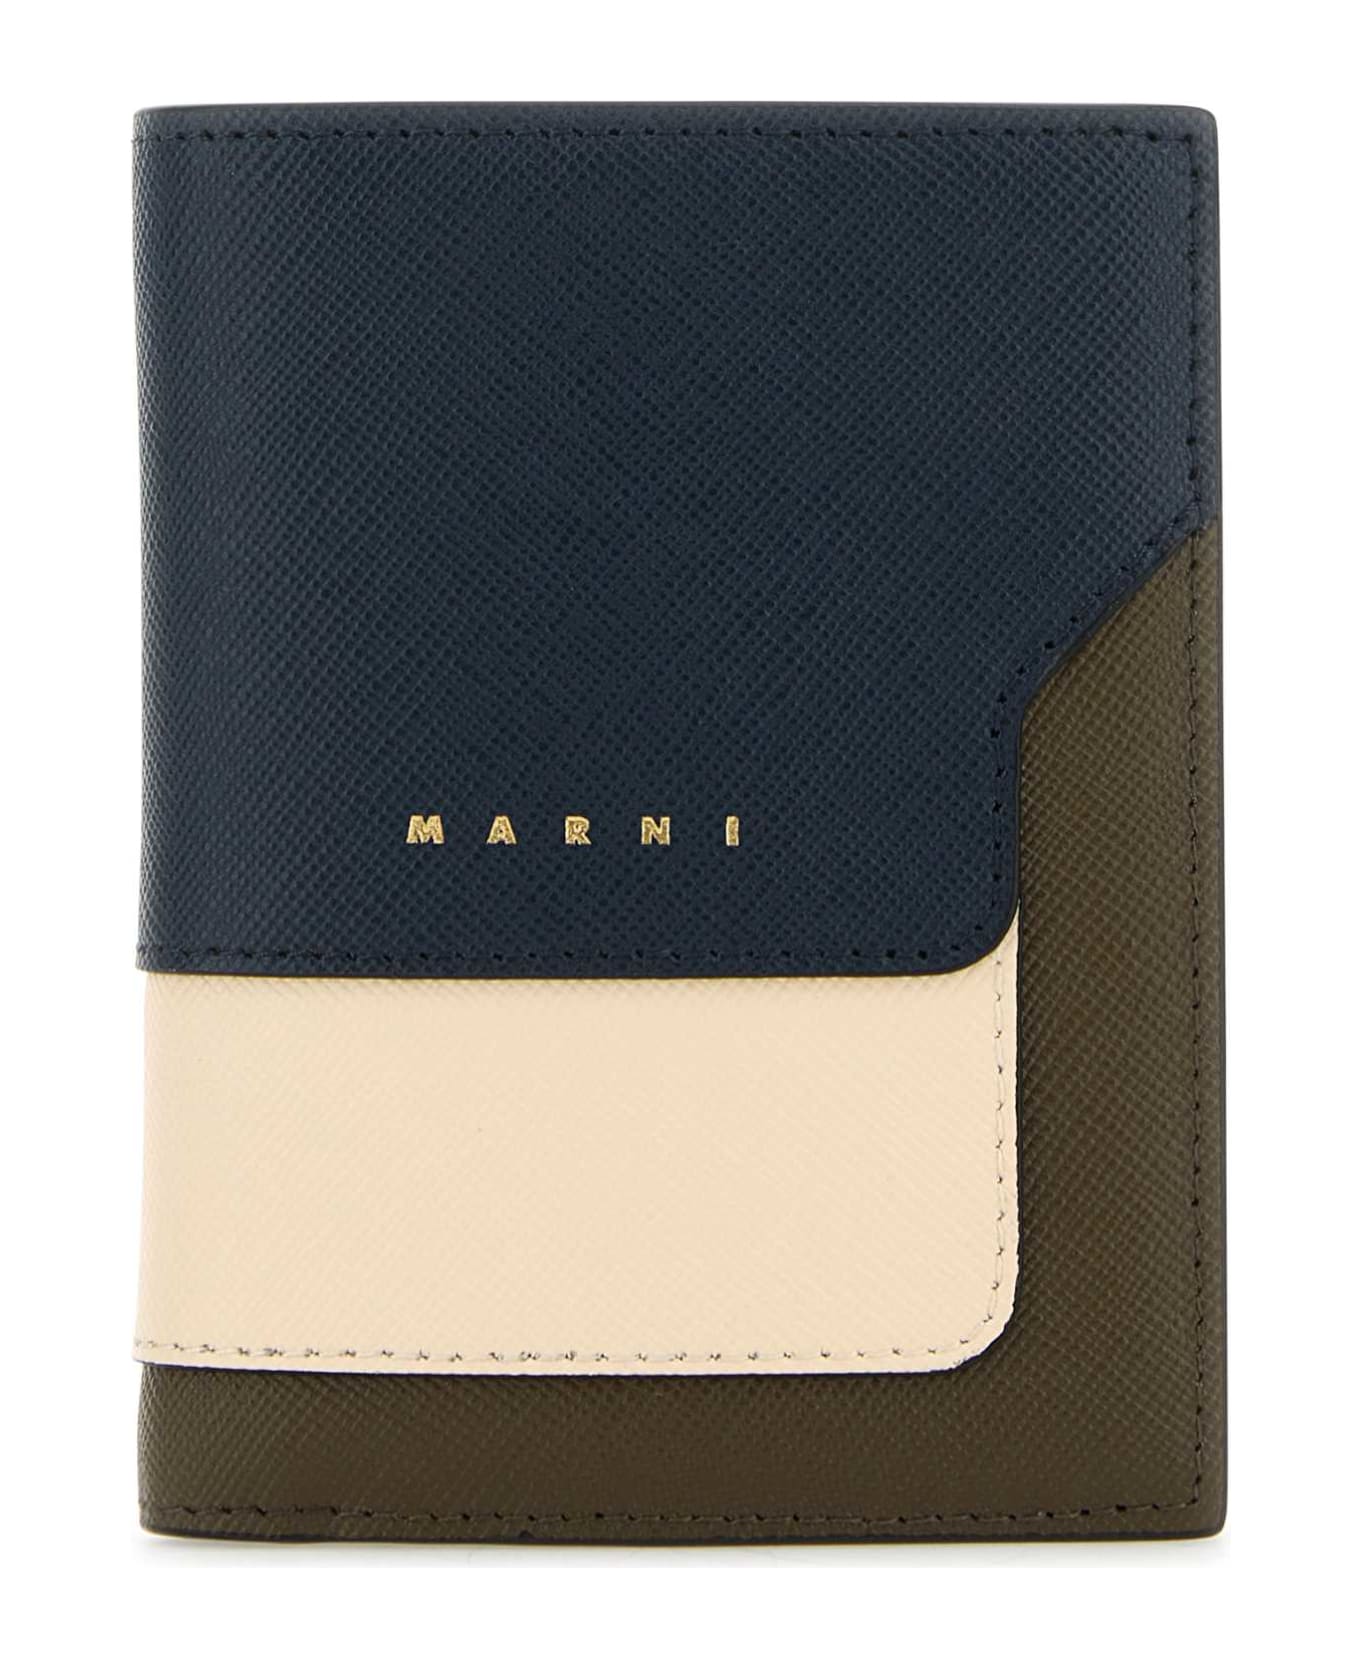 Marni Multicolor Leather Wallet - NIGHTBLUETALCDUSTYOLIVE